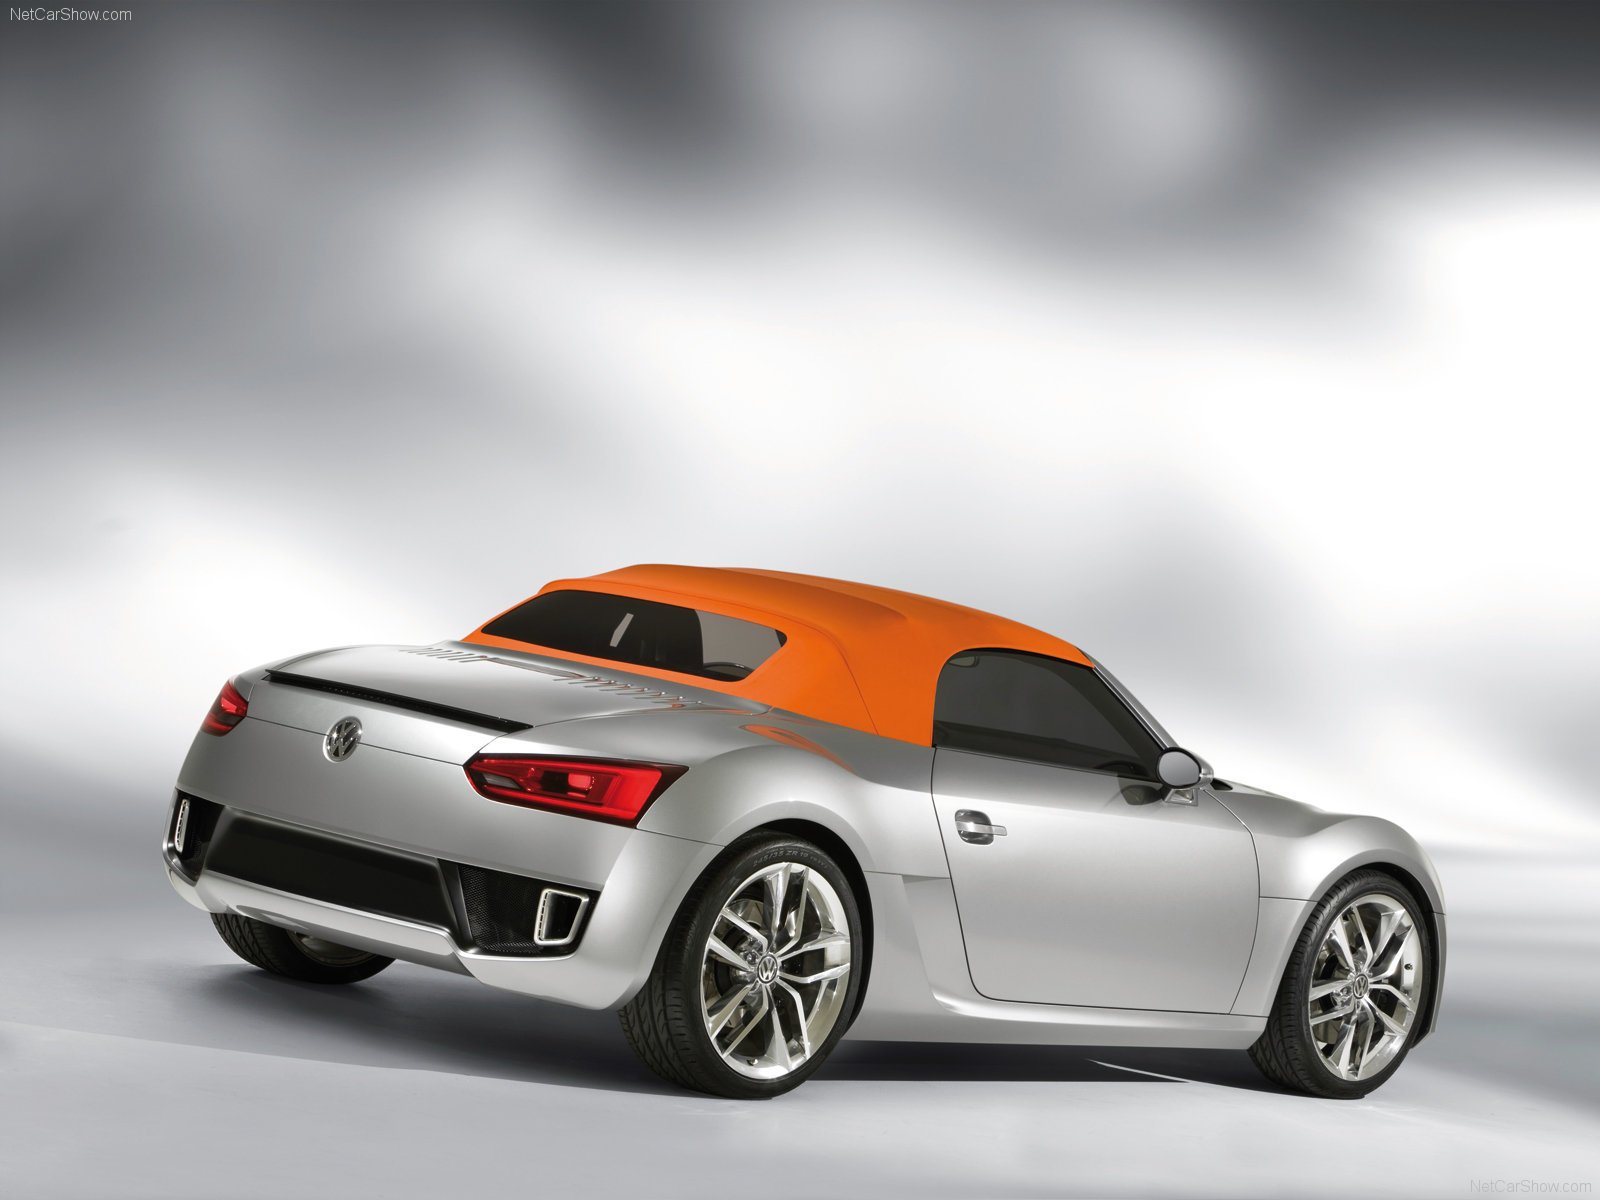 bluesport, Concept, Volkswagen, Cars, Convertible, 2009 Wallpapers HD \/ Desktop and Mobile ...